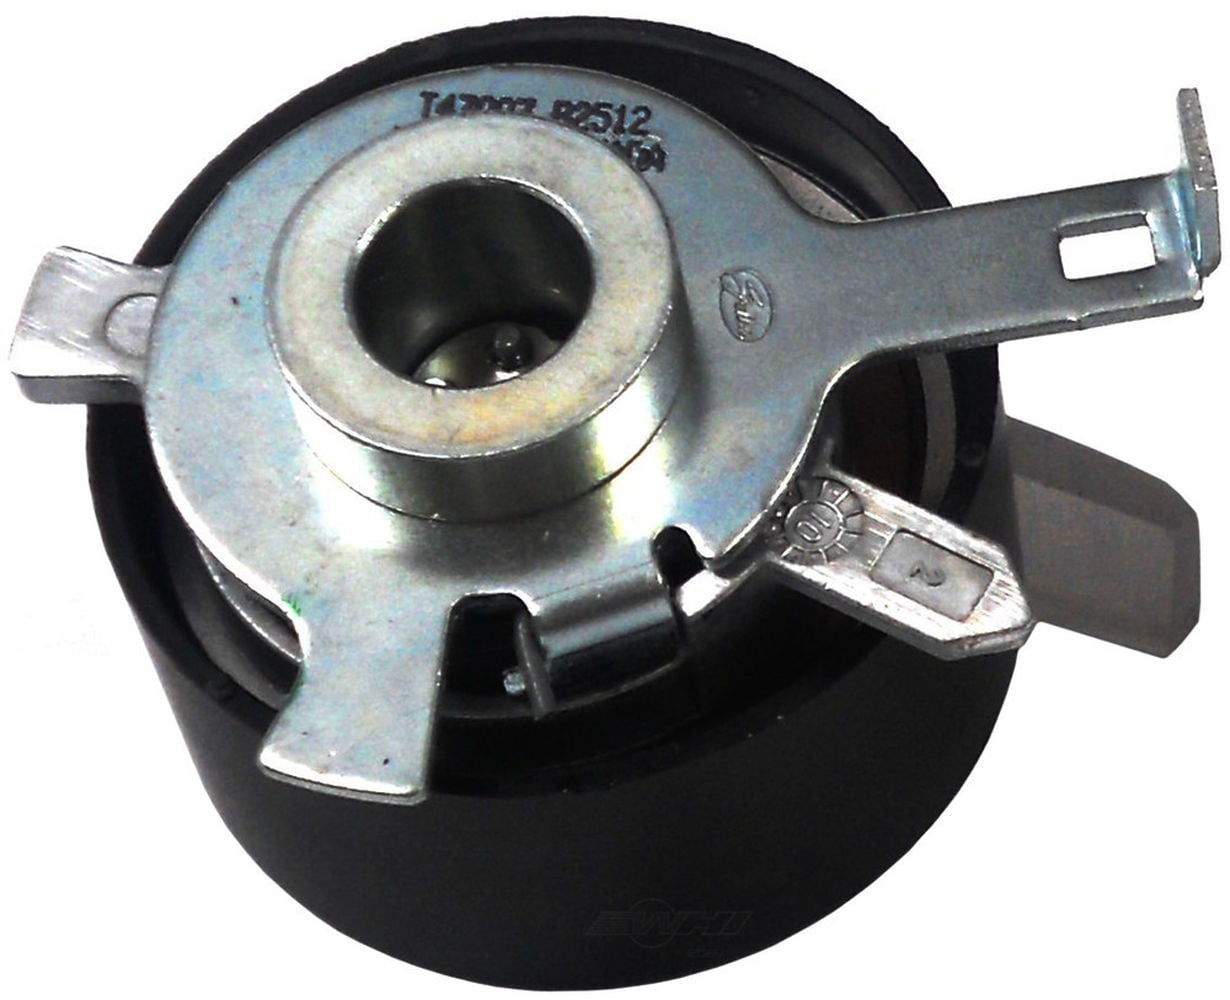 FIT TOOLS Universal Adjustable Timing Belt Locking Tooth Pulleys Tool 0 ~ 60 mm 